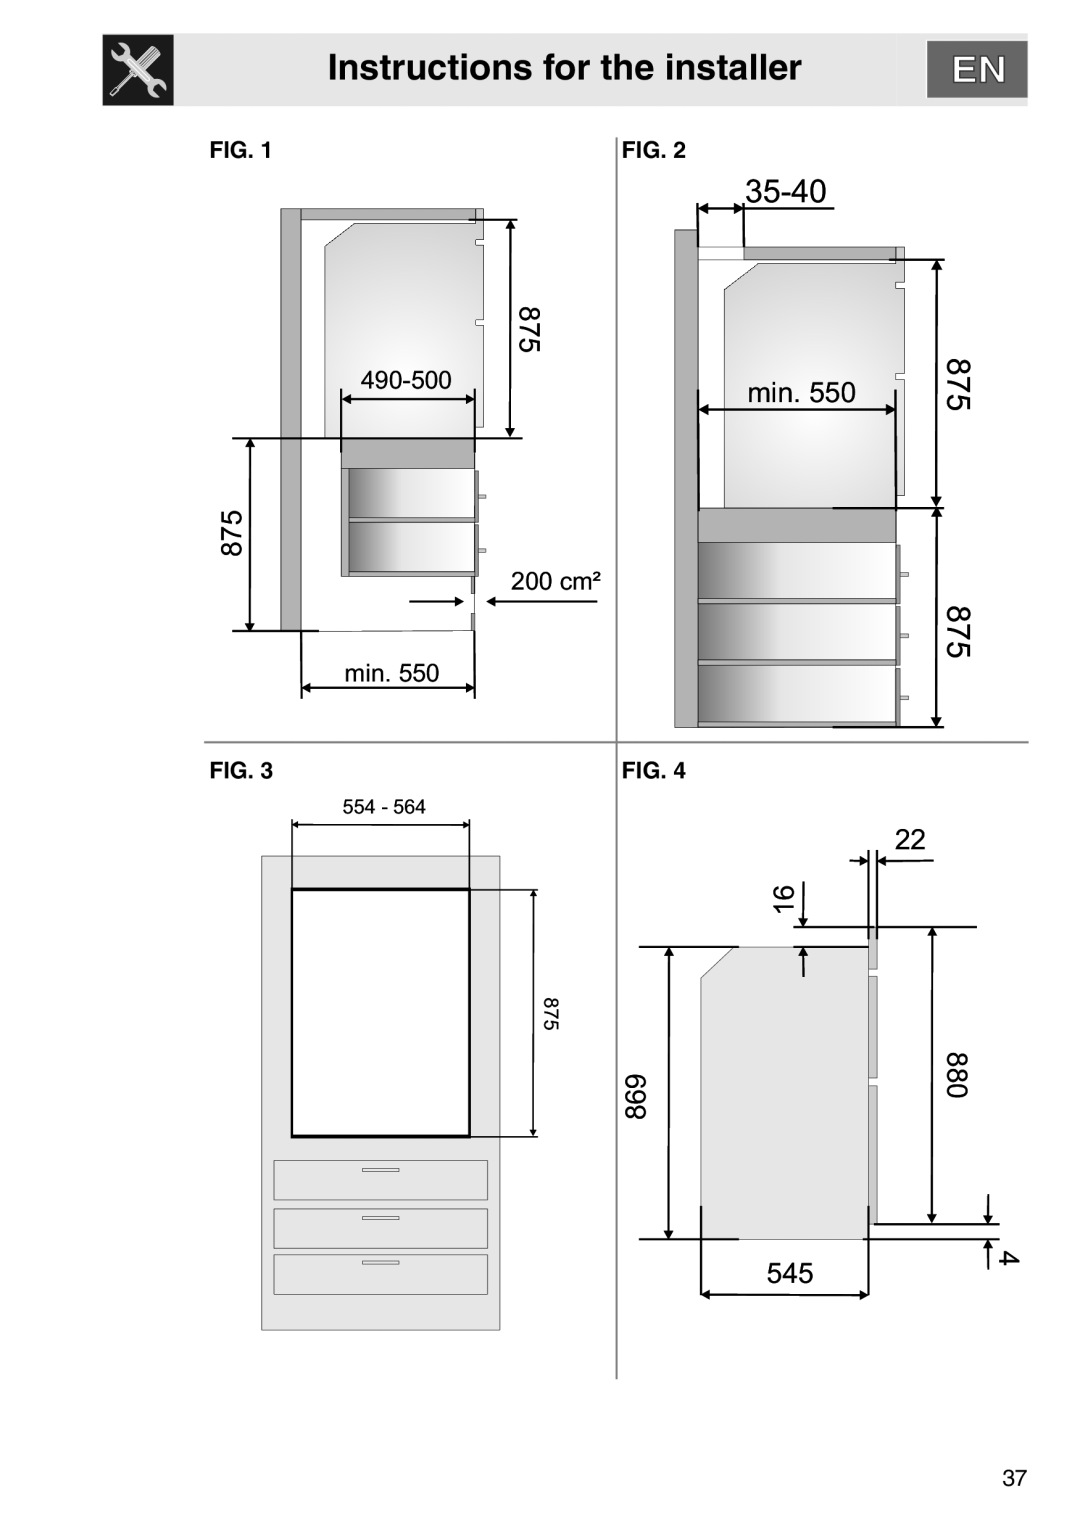 Smeg DOSCA36X-8, smeg Double Oven installation instructions 35-40, Instructions for the installer, 490-500, 200 cm² 